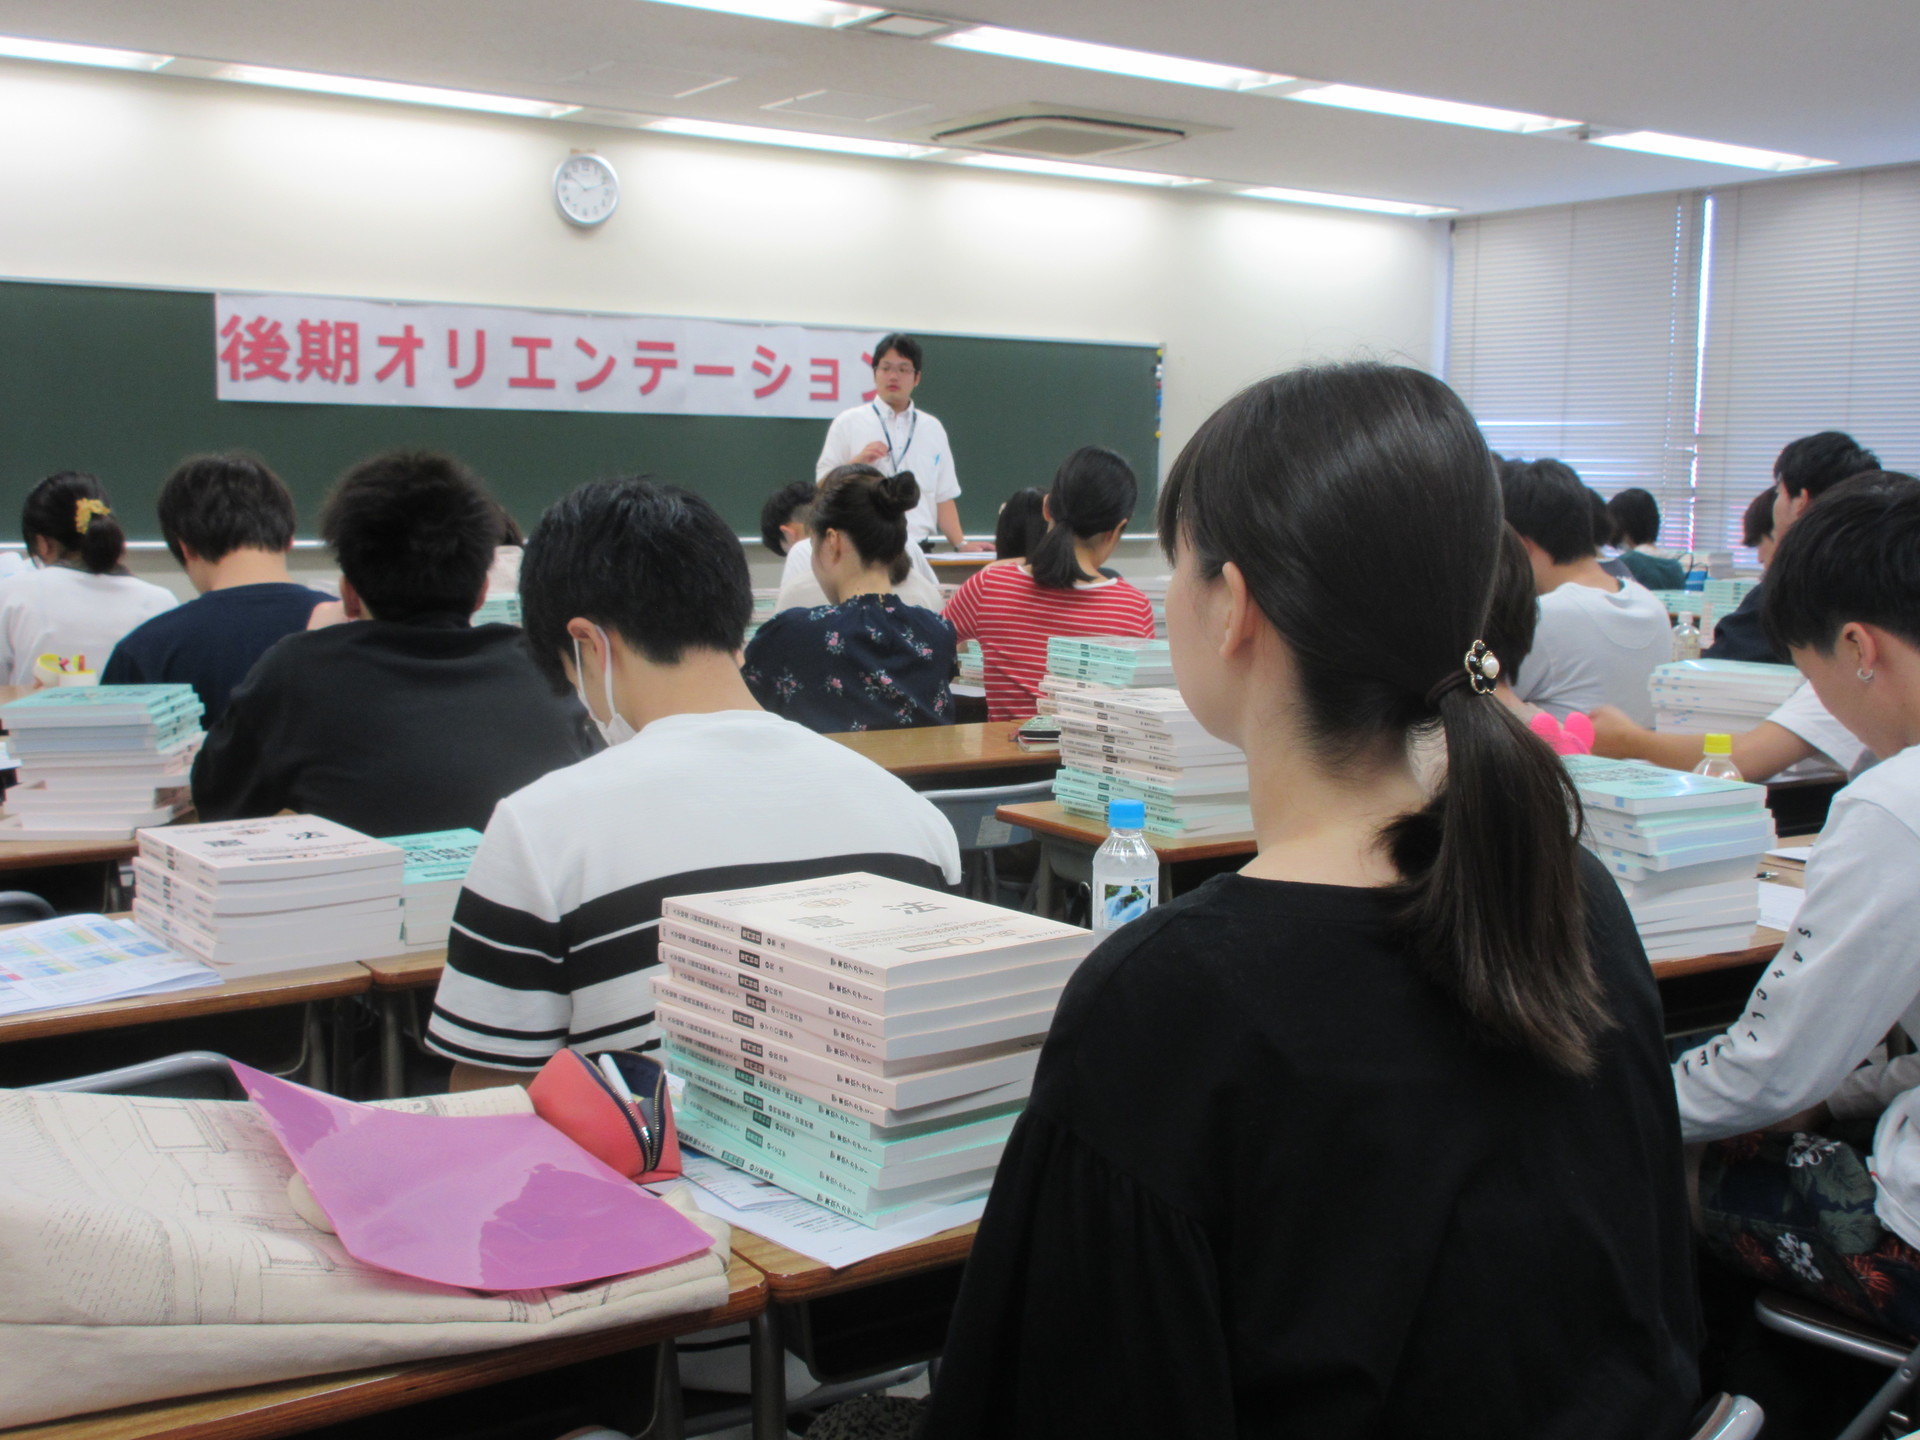 東京アカデミー松山校 教員採用試験 看護師国家試験 公務員試験 のブログ